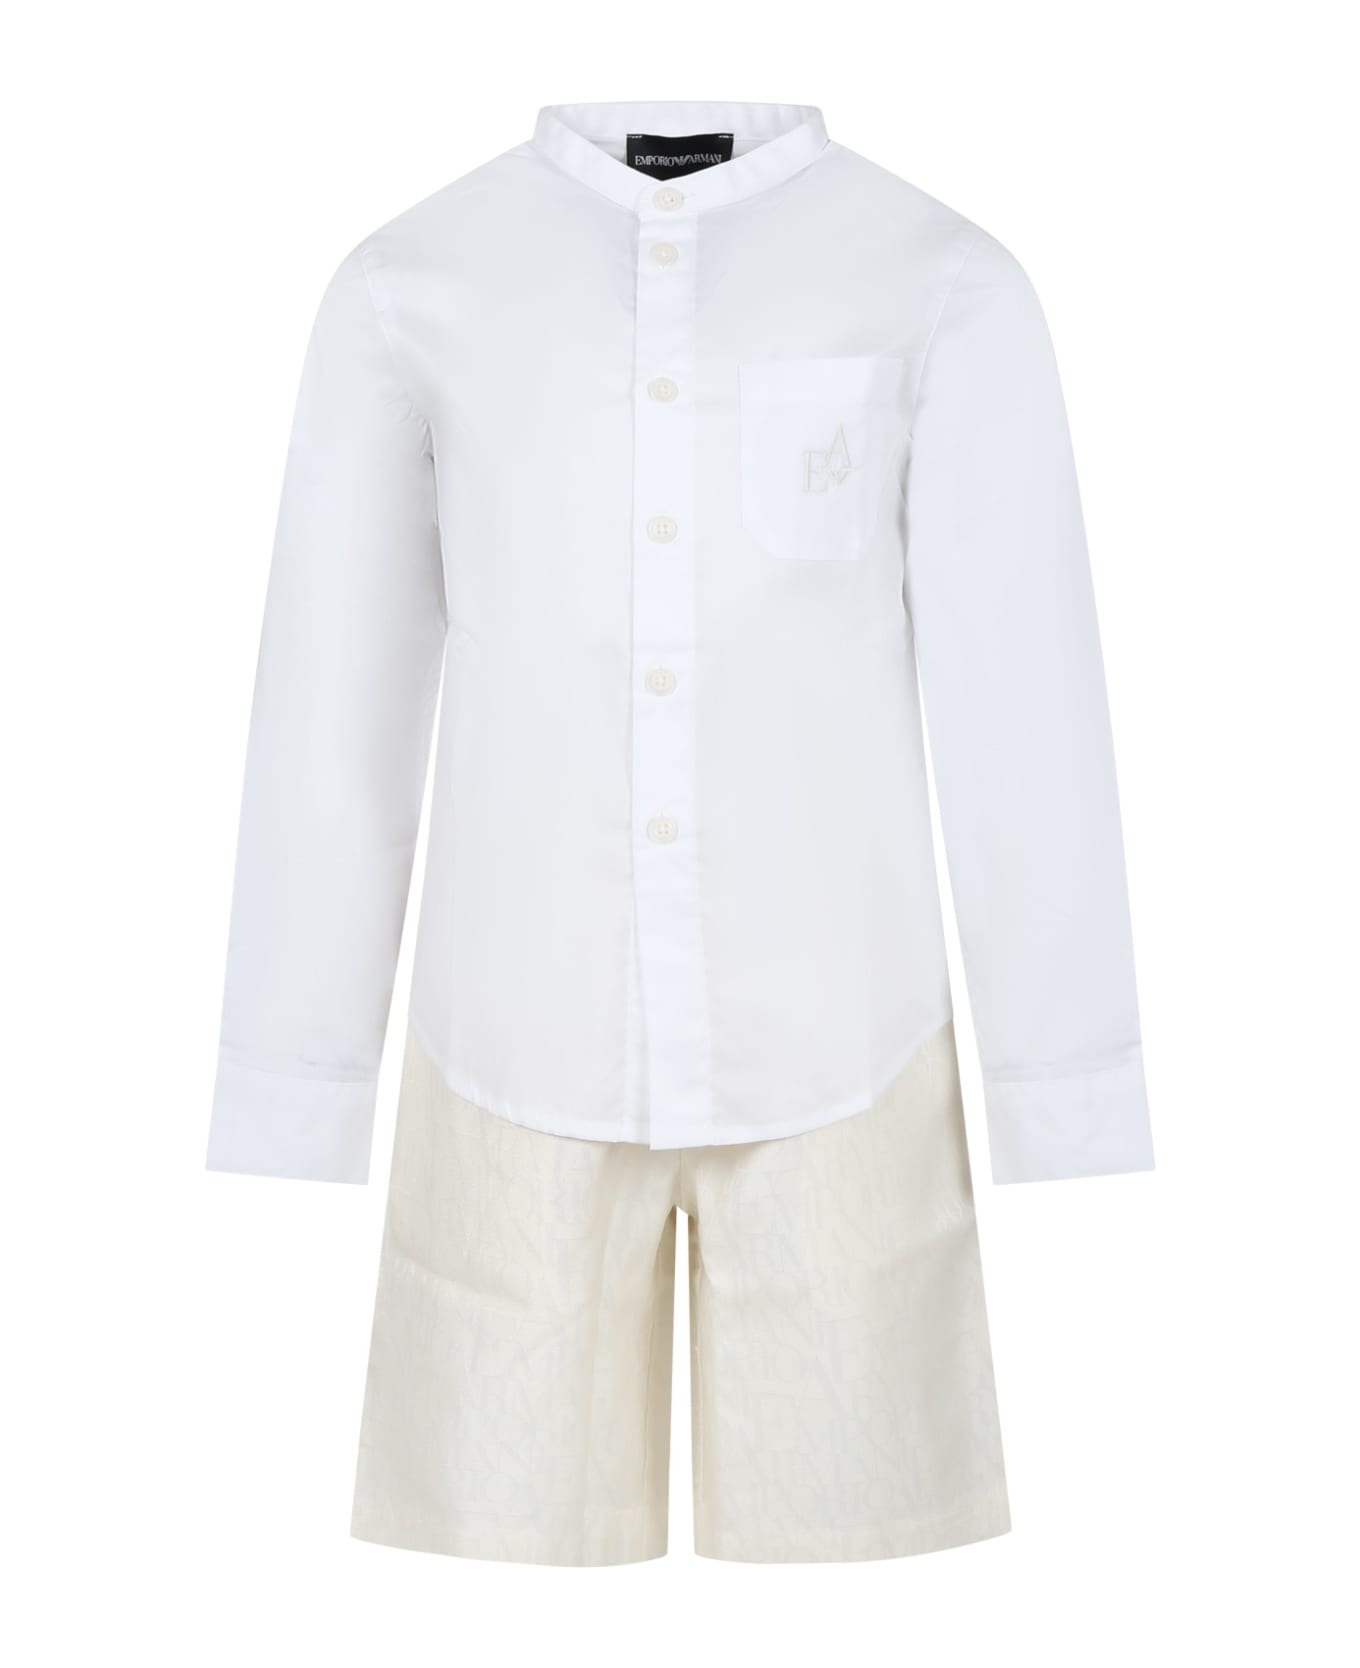 Emporio Armani Elegant Ivory Suit For Boy With Logo - Ivory